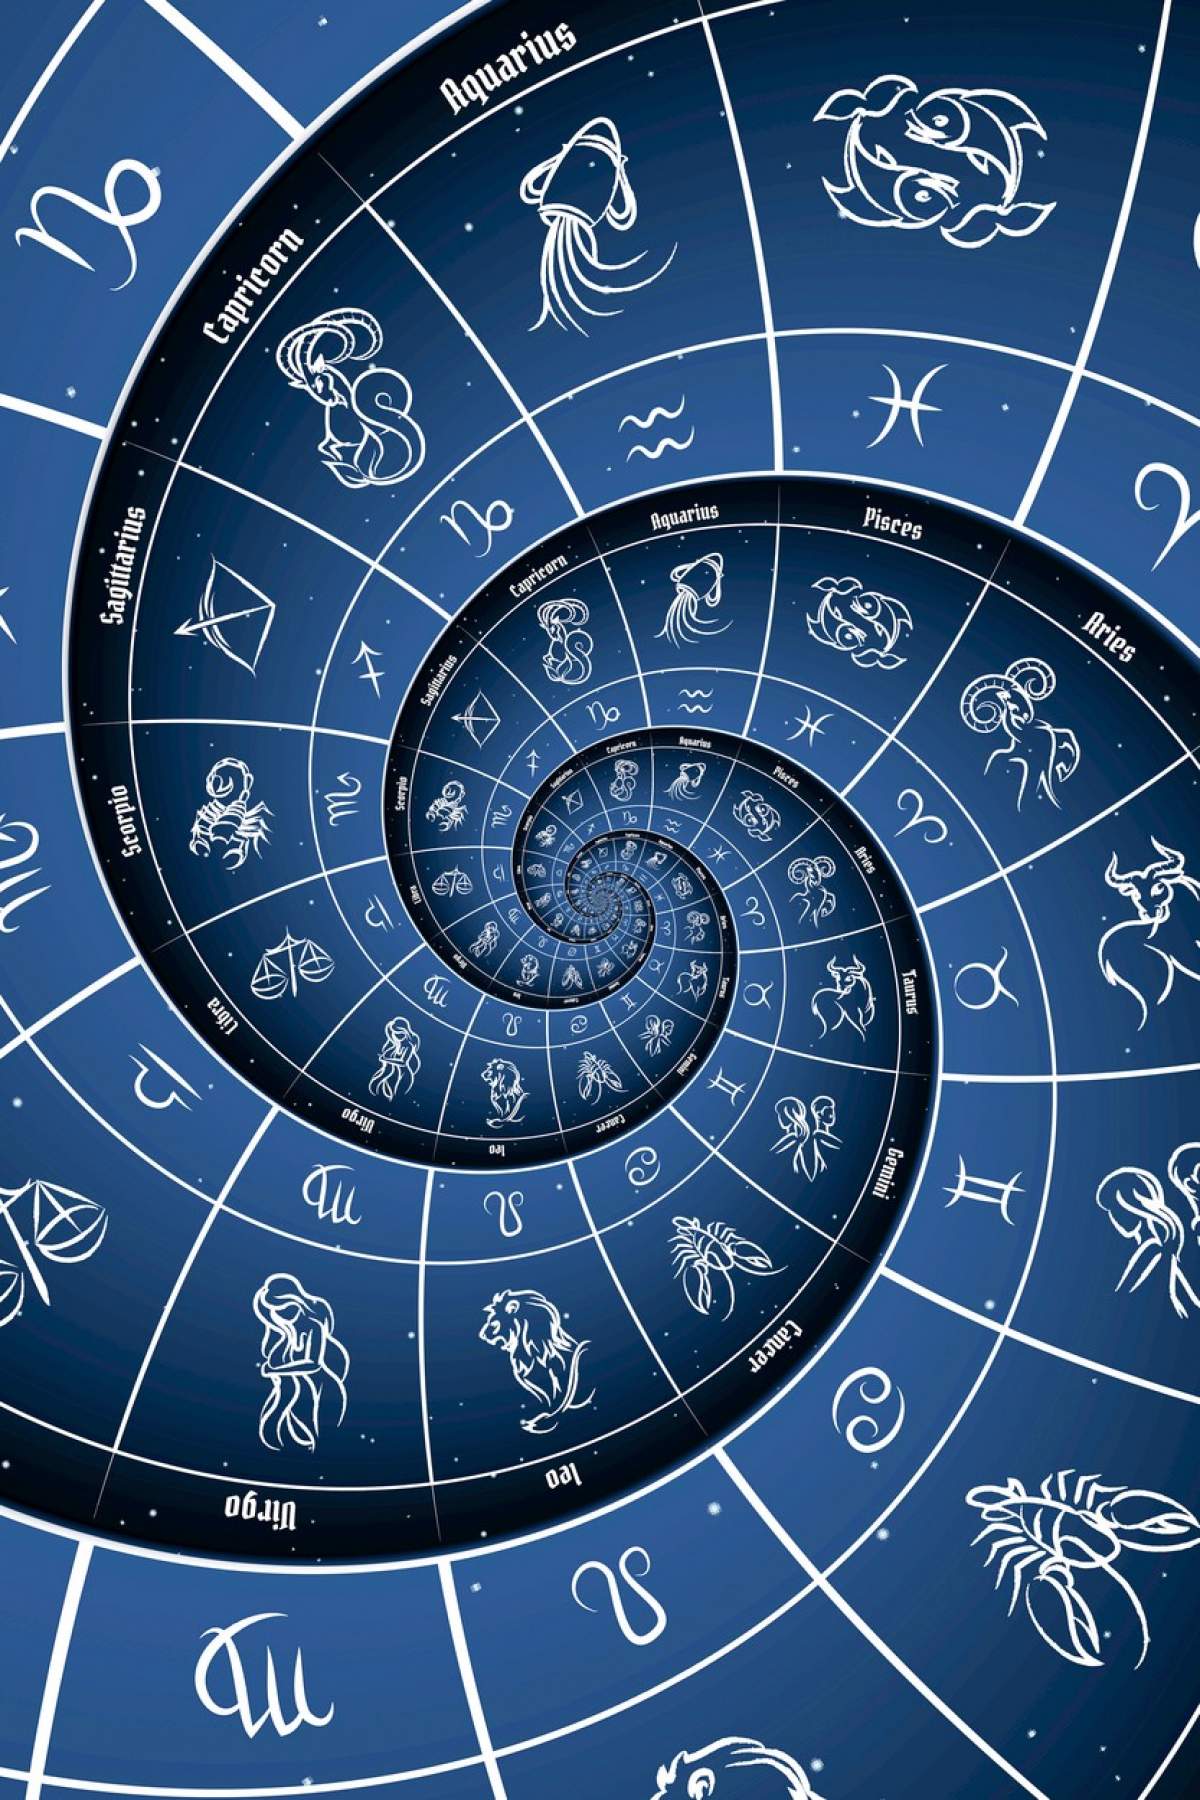 Fundal astrologic albastru. Concept de horoscop, mister, mag